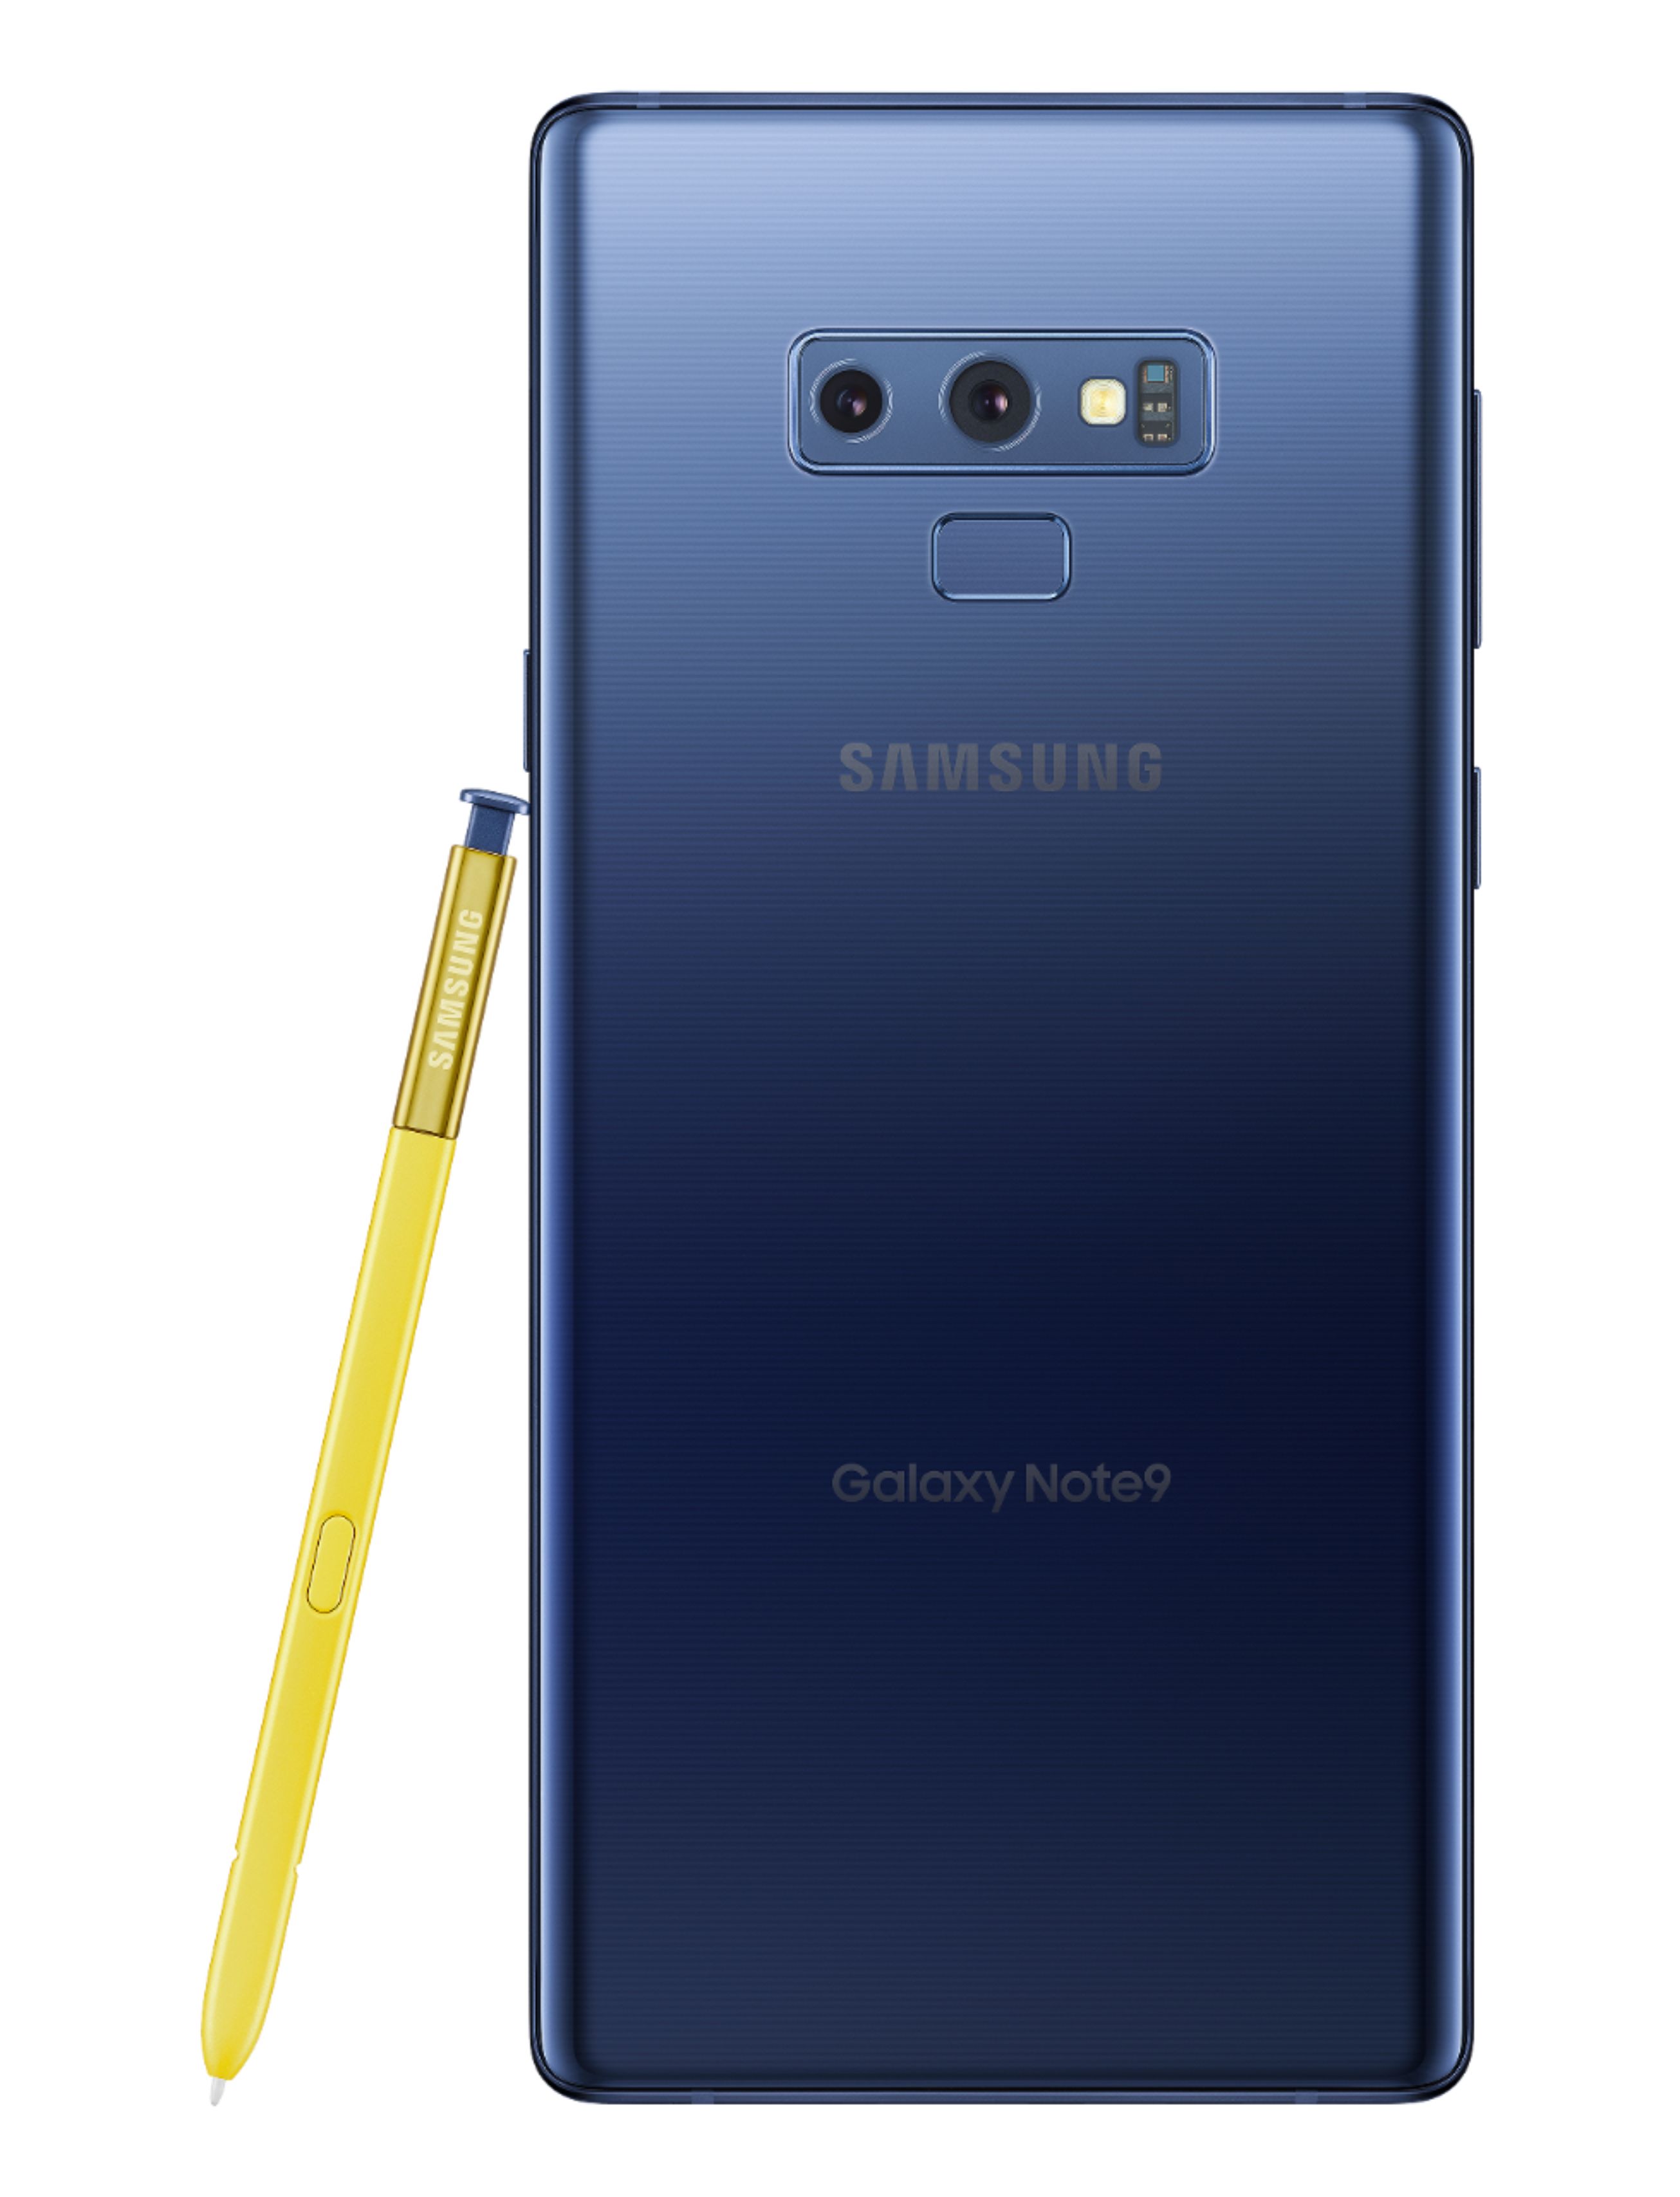 Back View: Samsung - Geek Squad Certified Refurbished Galaxy Note9 128GB - Ocean Blue (Sprint)